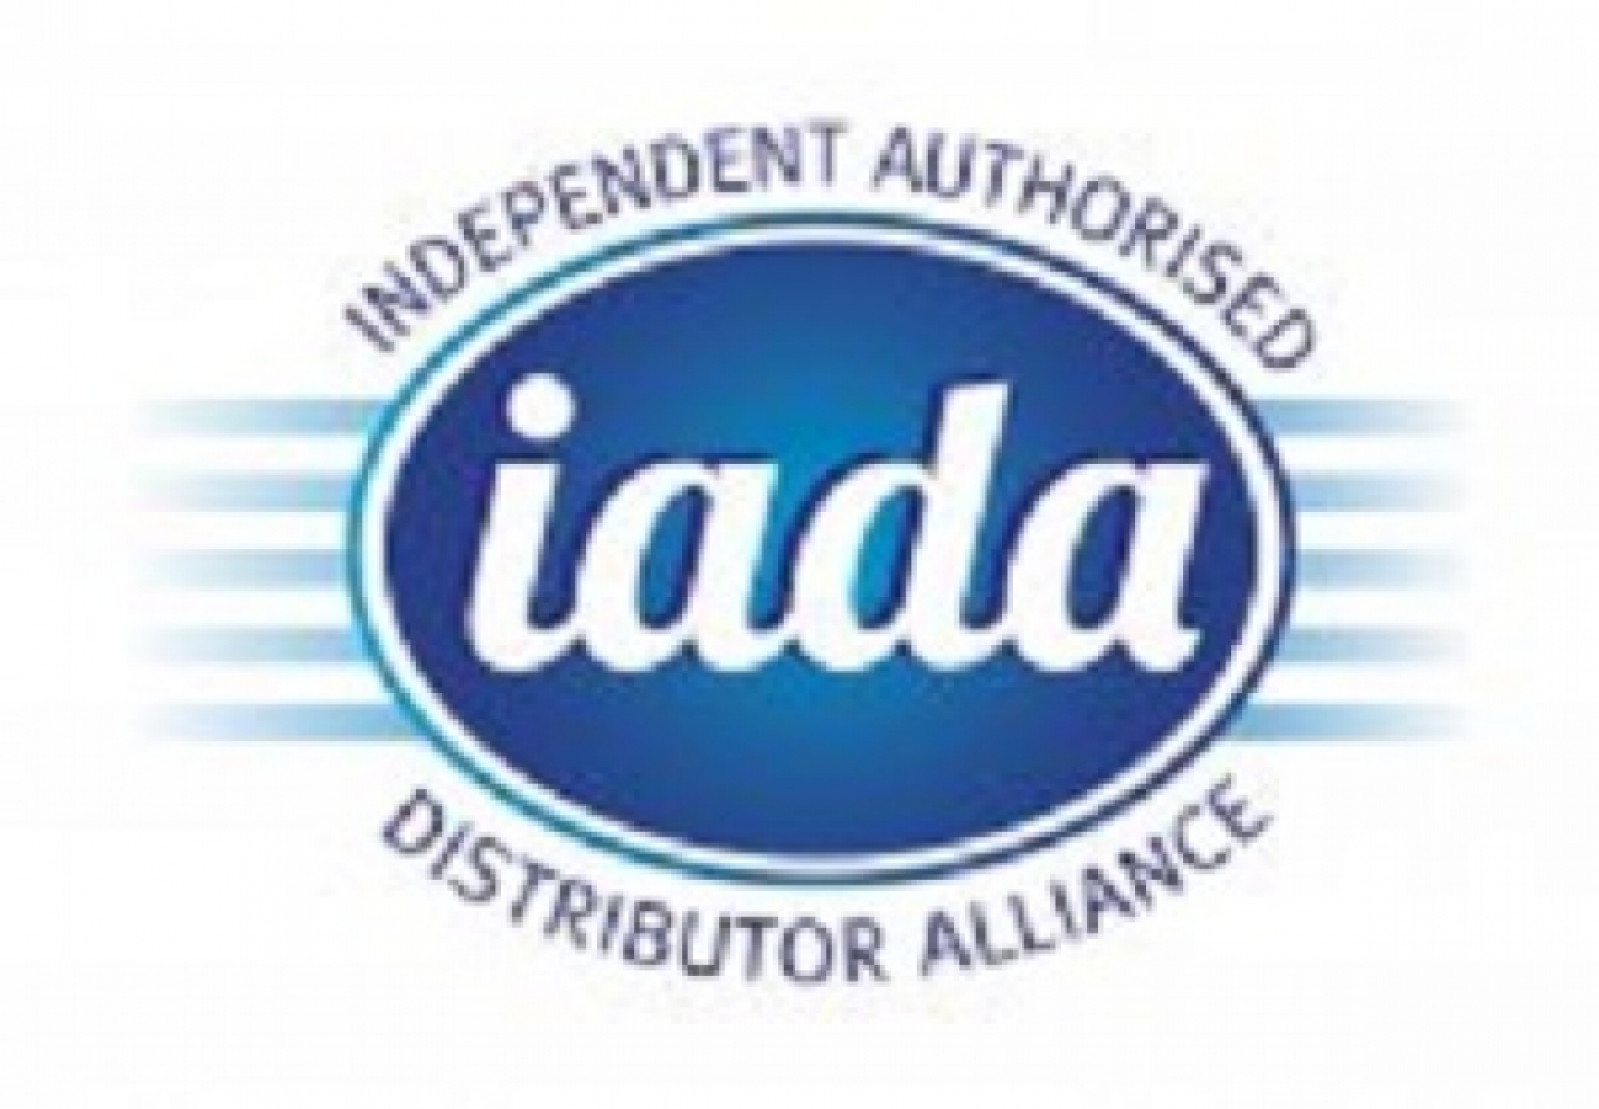 Engineers Mate joins IADA